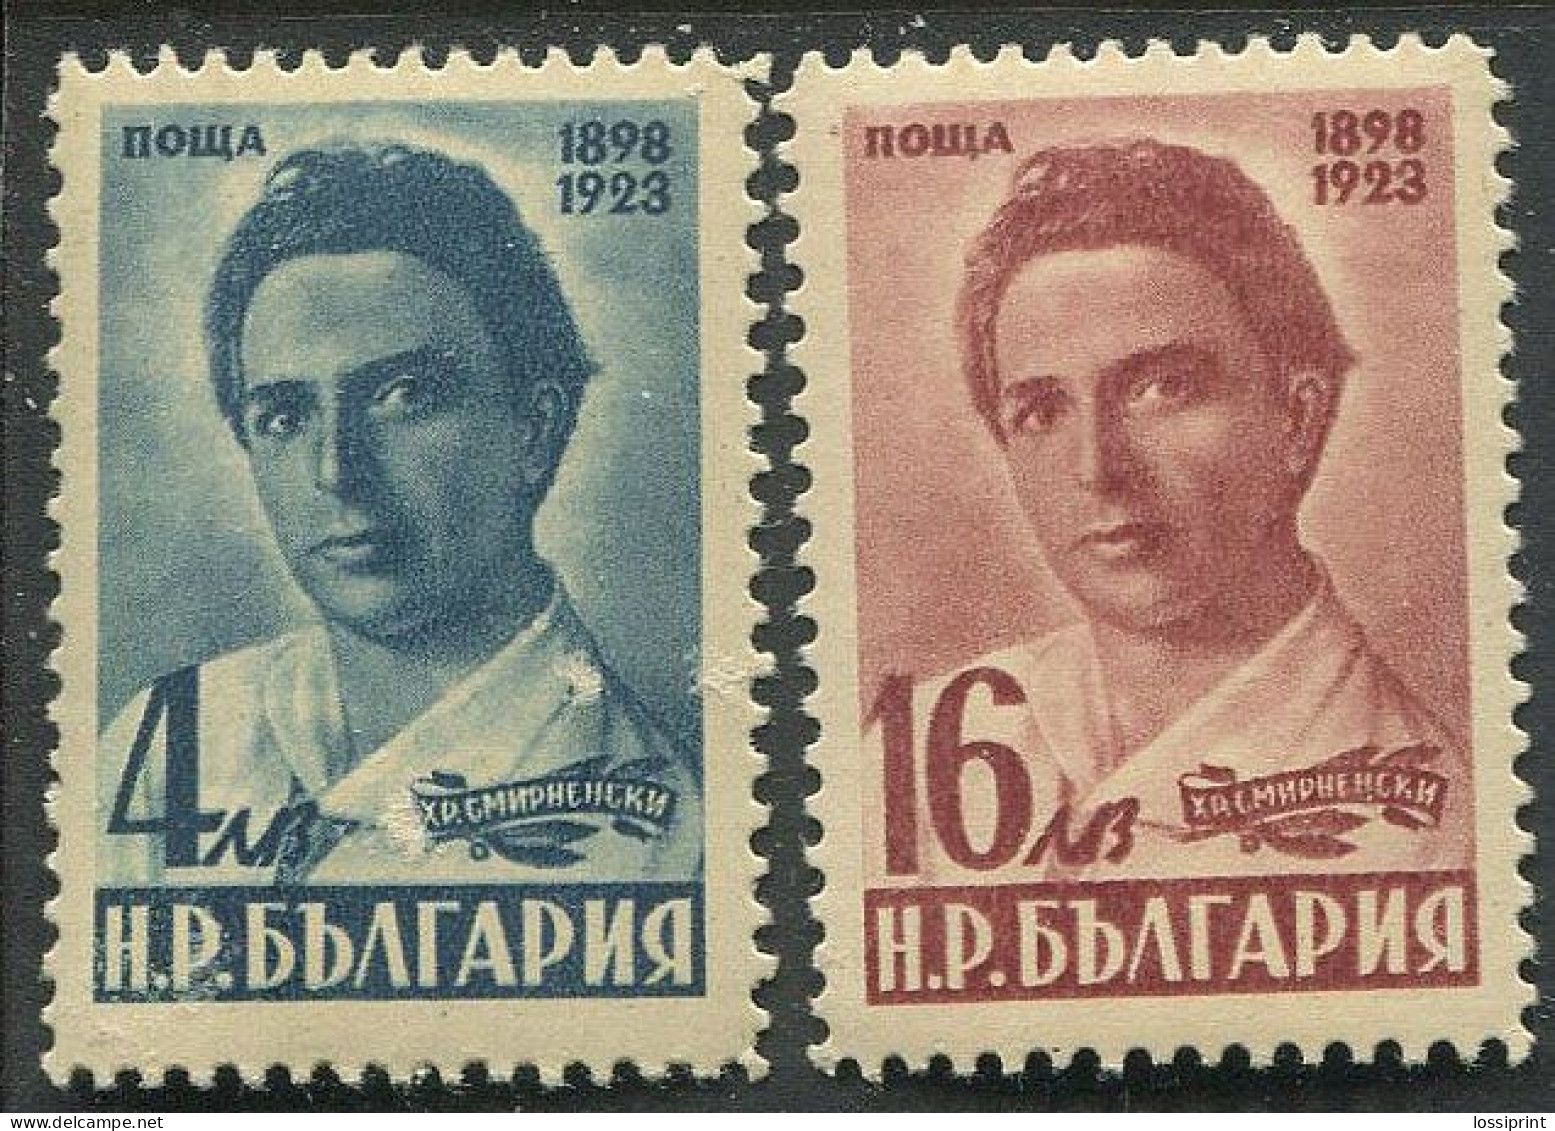 Bulgaria:Unused Stamps Serie H.R.Smirnenski, 1948, MNH - Nuevos